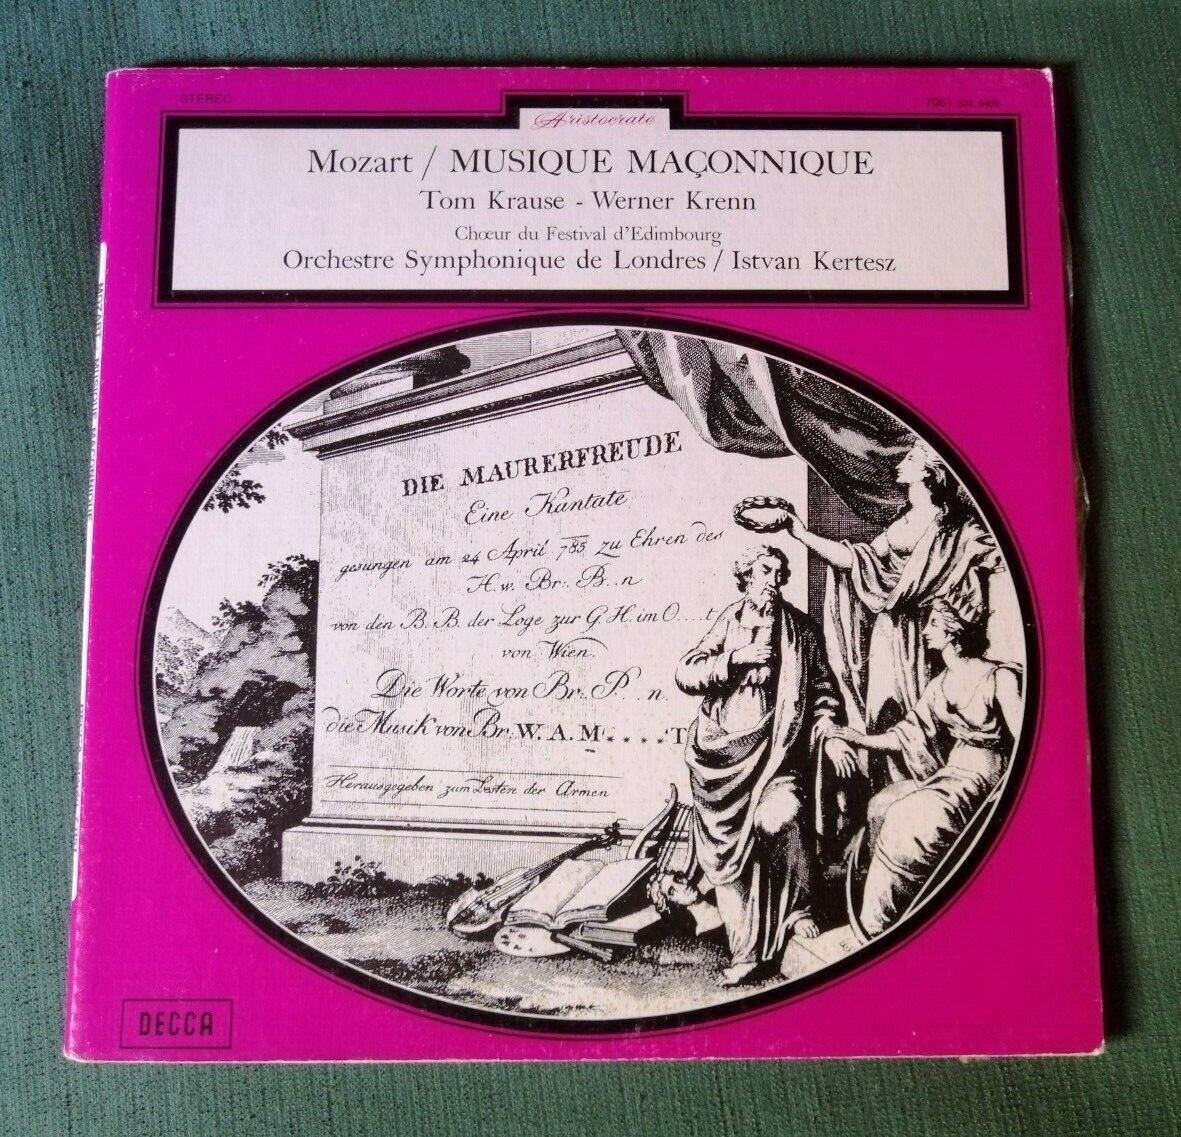 Mozart Music Masonic/Tom Krause, Krenn, Kertesz LP France Decca Sxl 6409